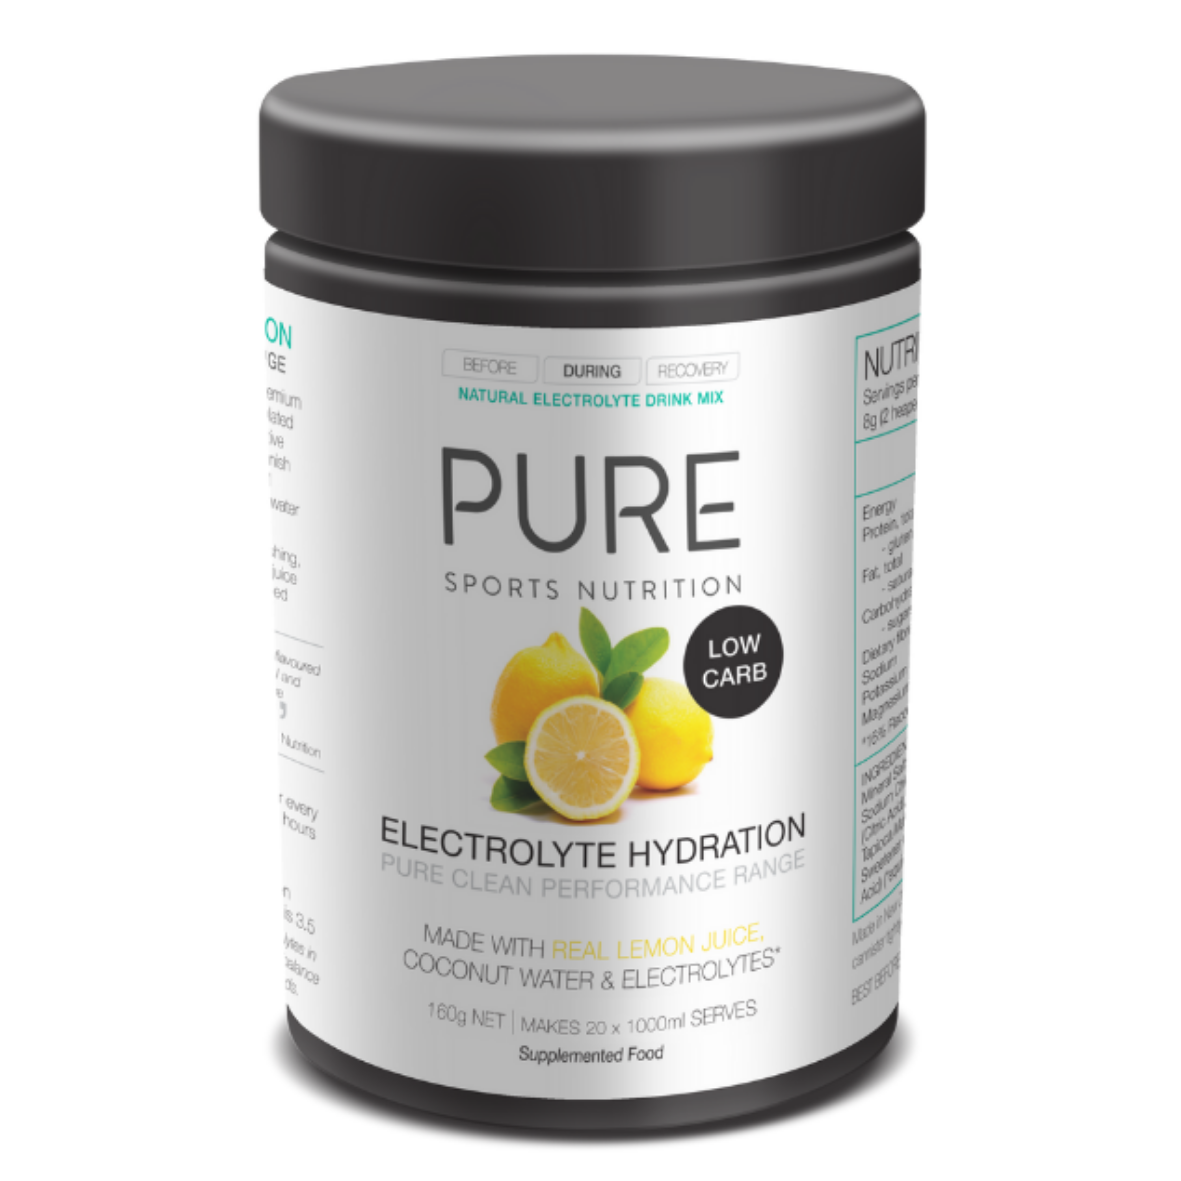 Pure Sport Nutrition - Electrolyte Hydration Low Carb - Lemon